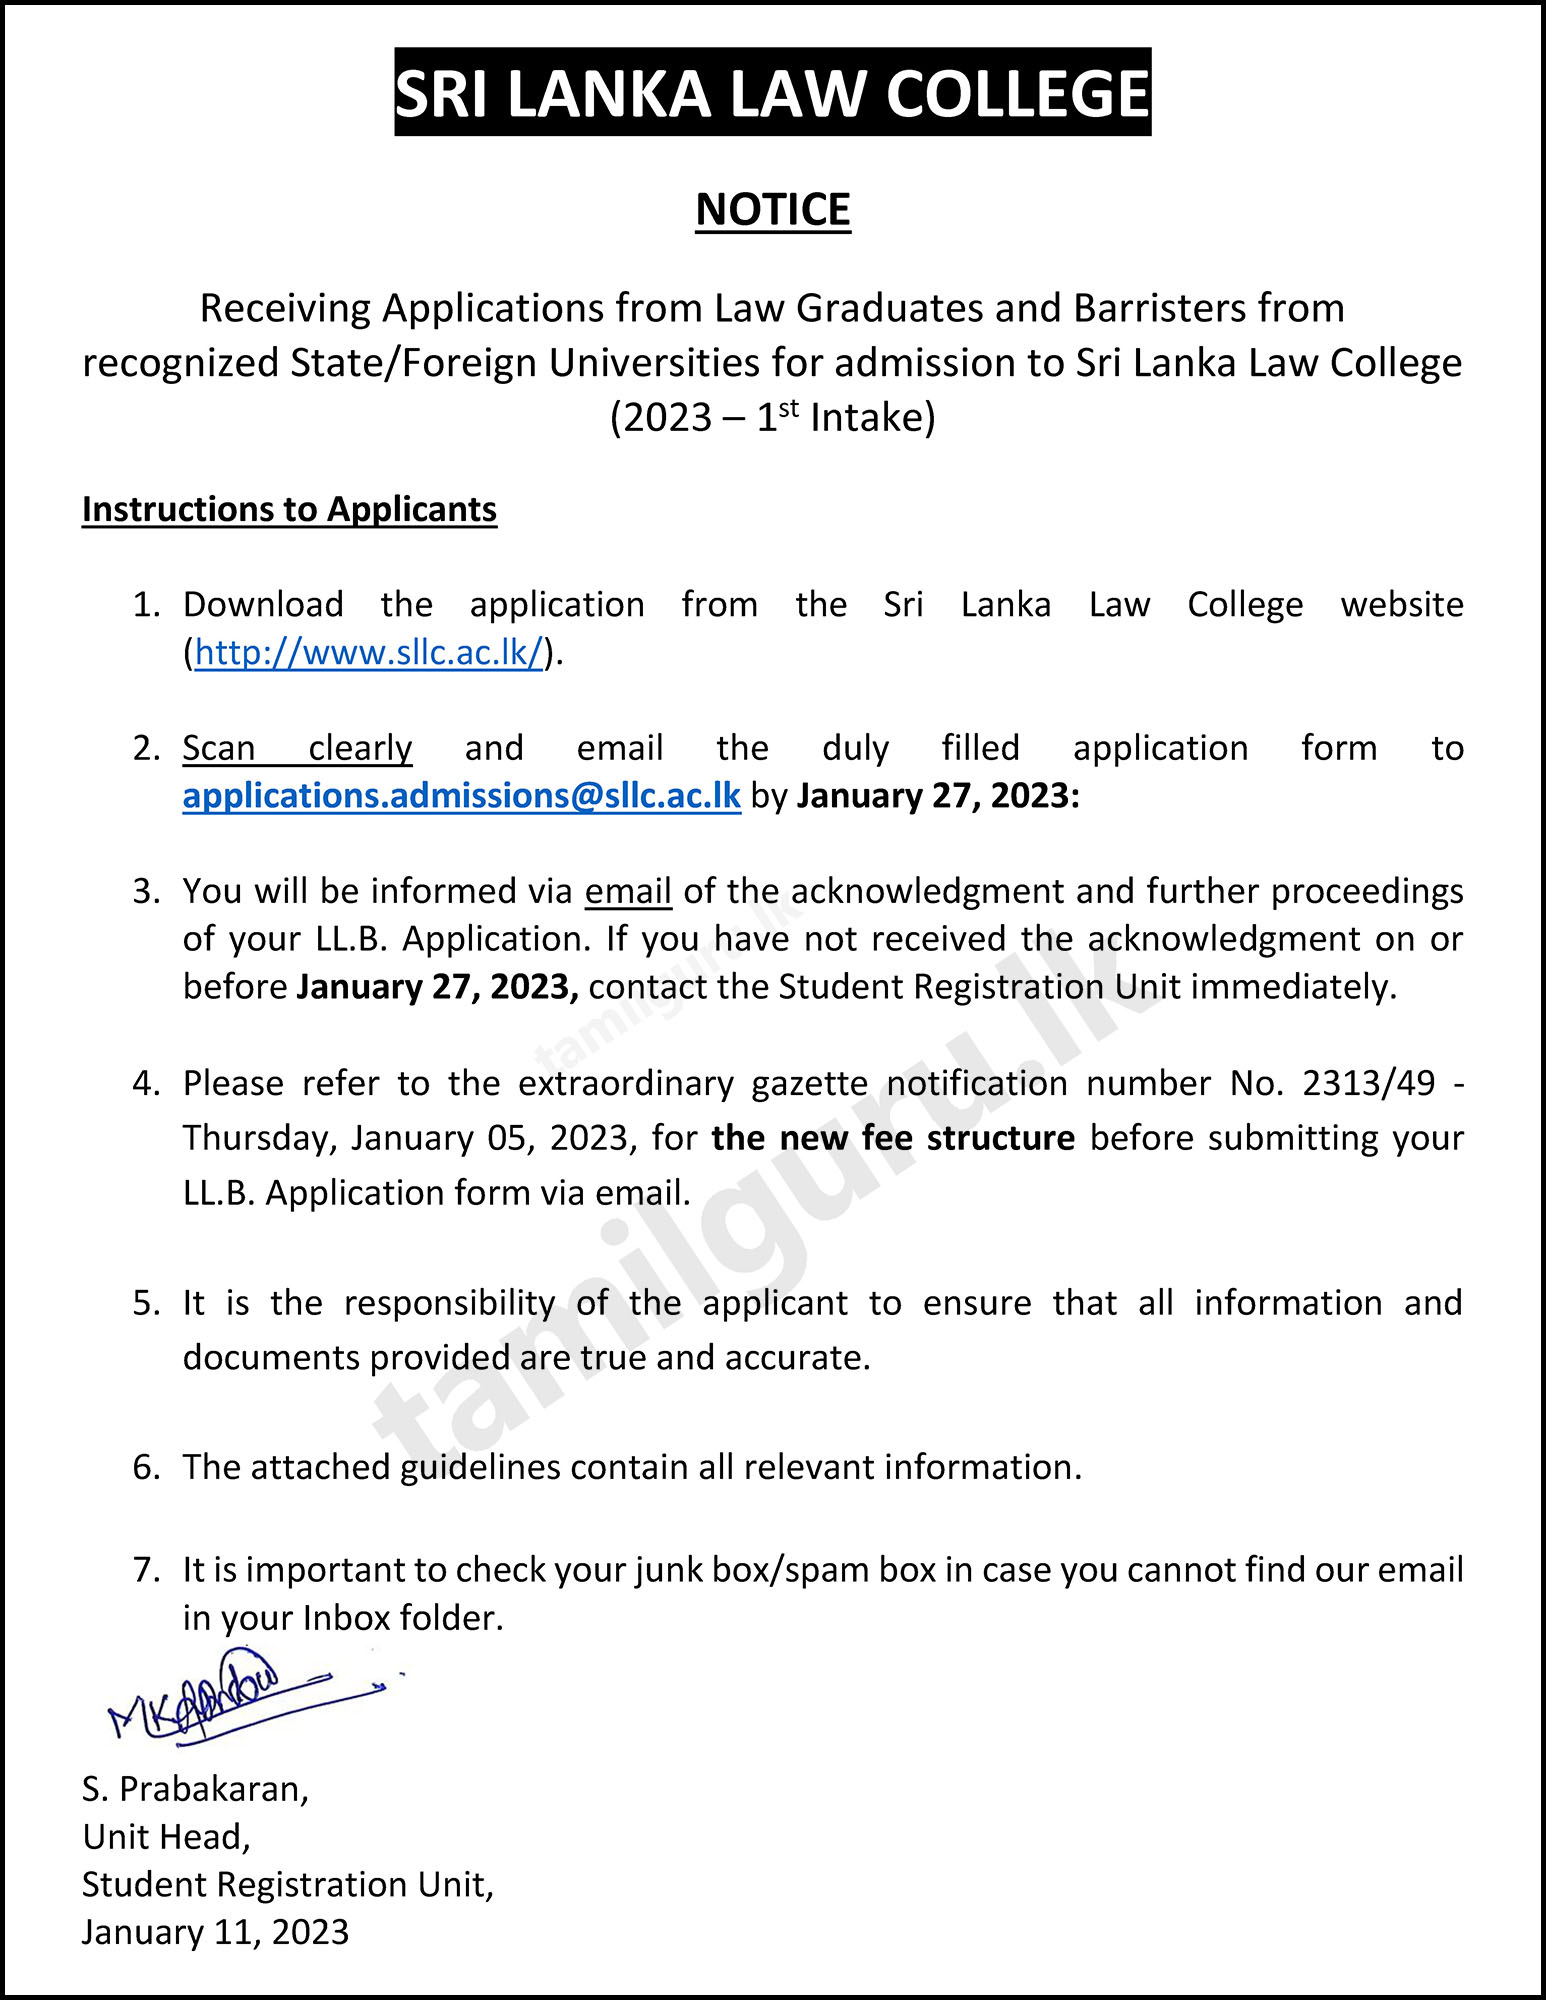 Sri Lanka Law College (SLLC) Admission for LLB Graduates and Barristers - 2023 (1st Intake)